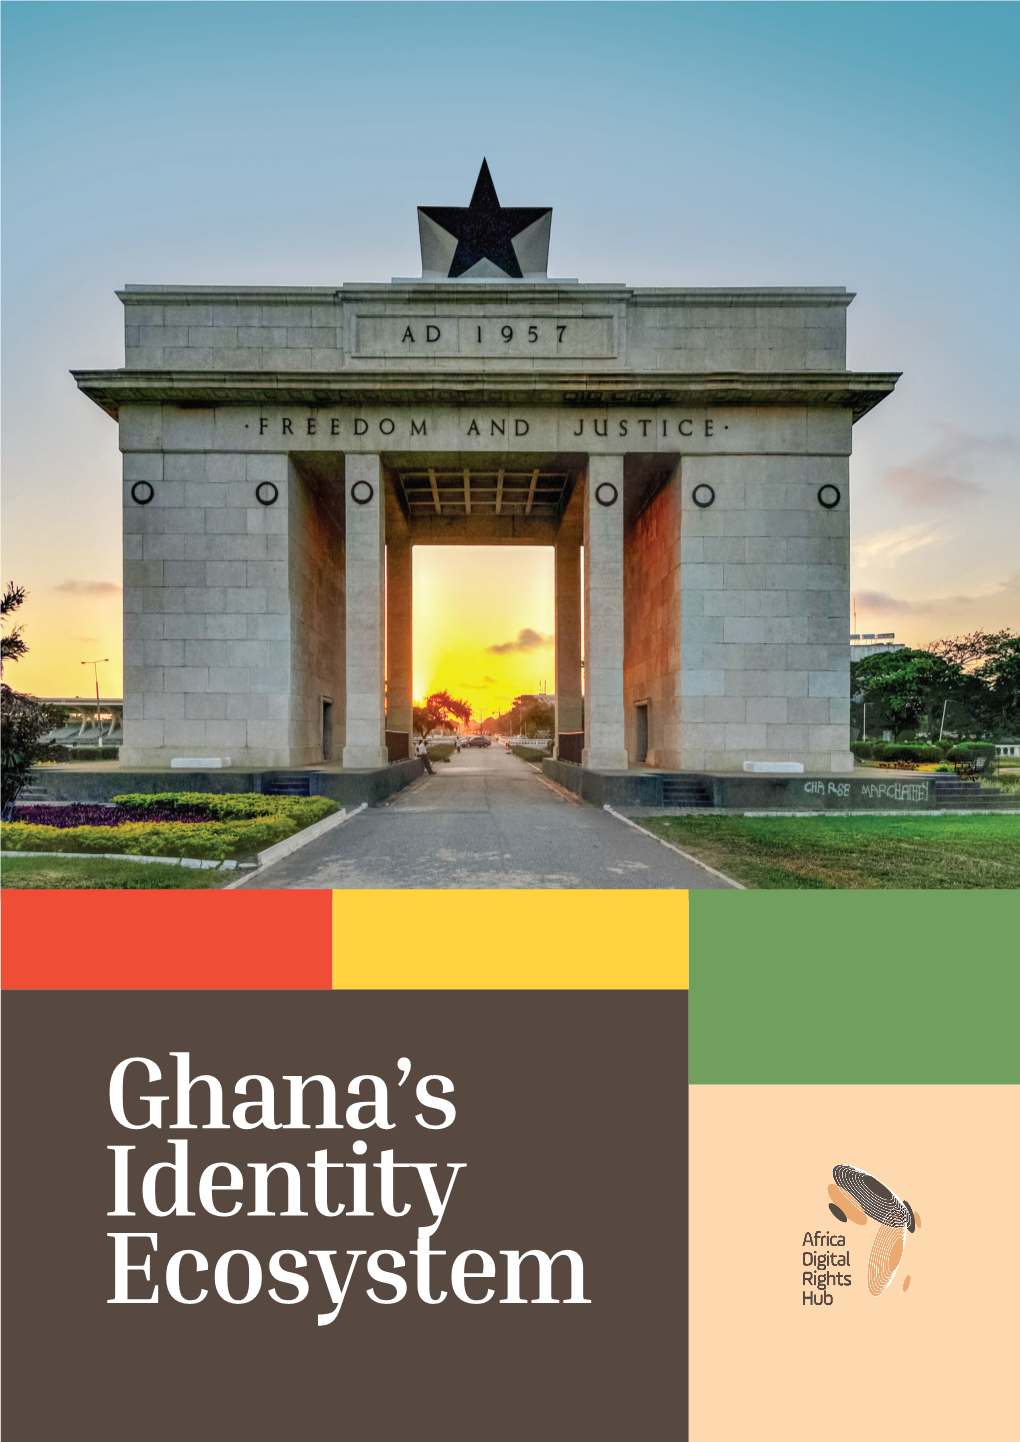 Ghana's Identity Ecosystem